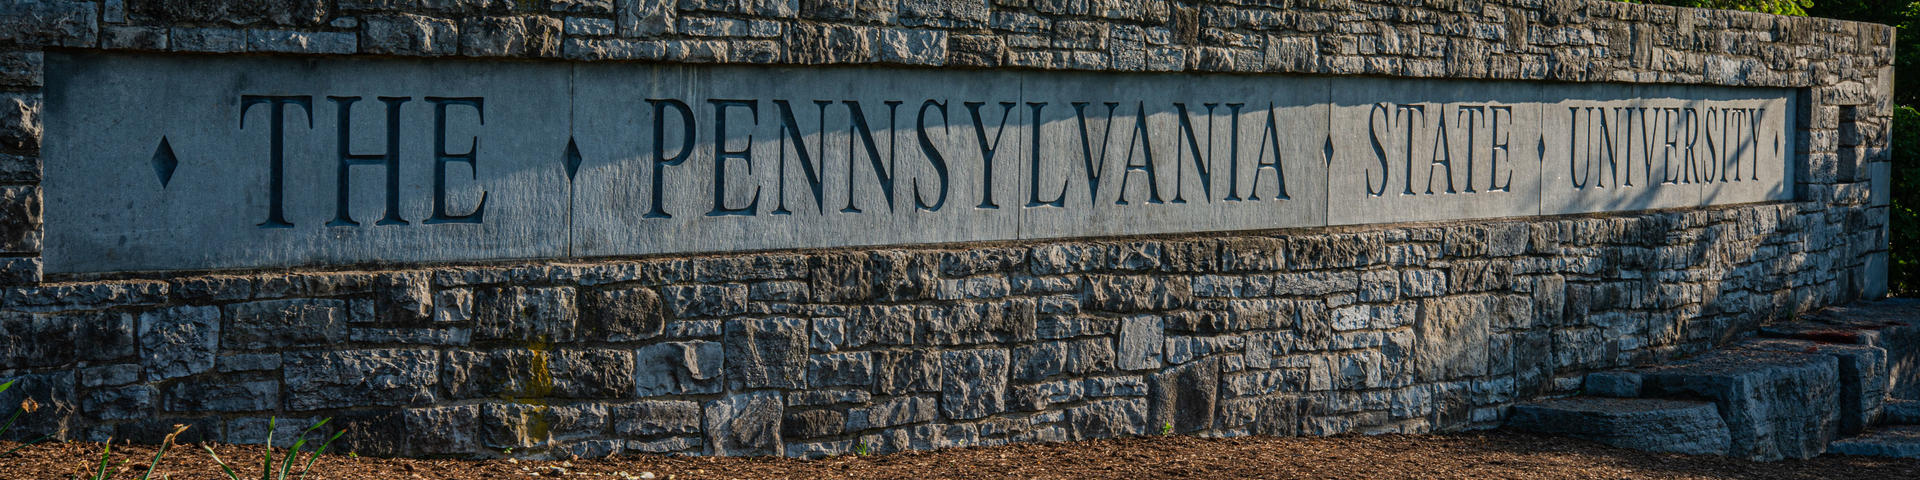 The Pennsylvania State University stone wall